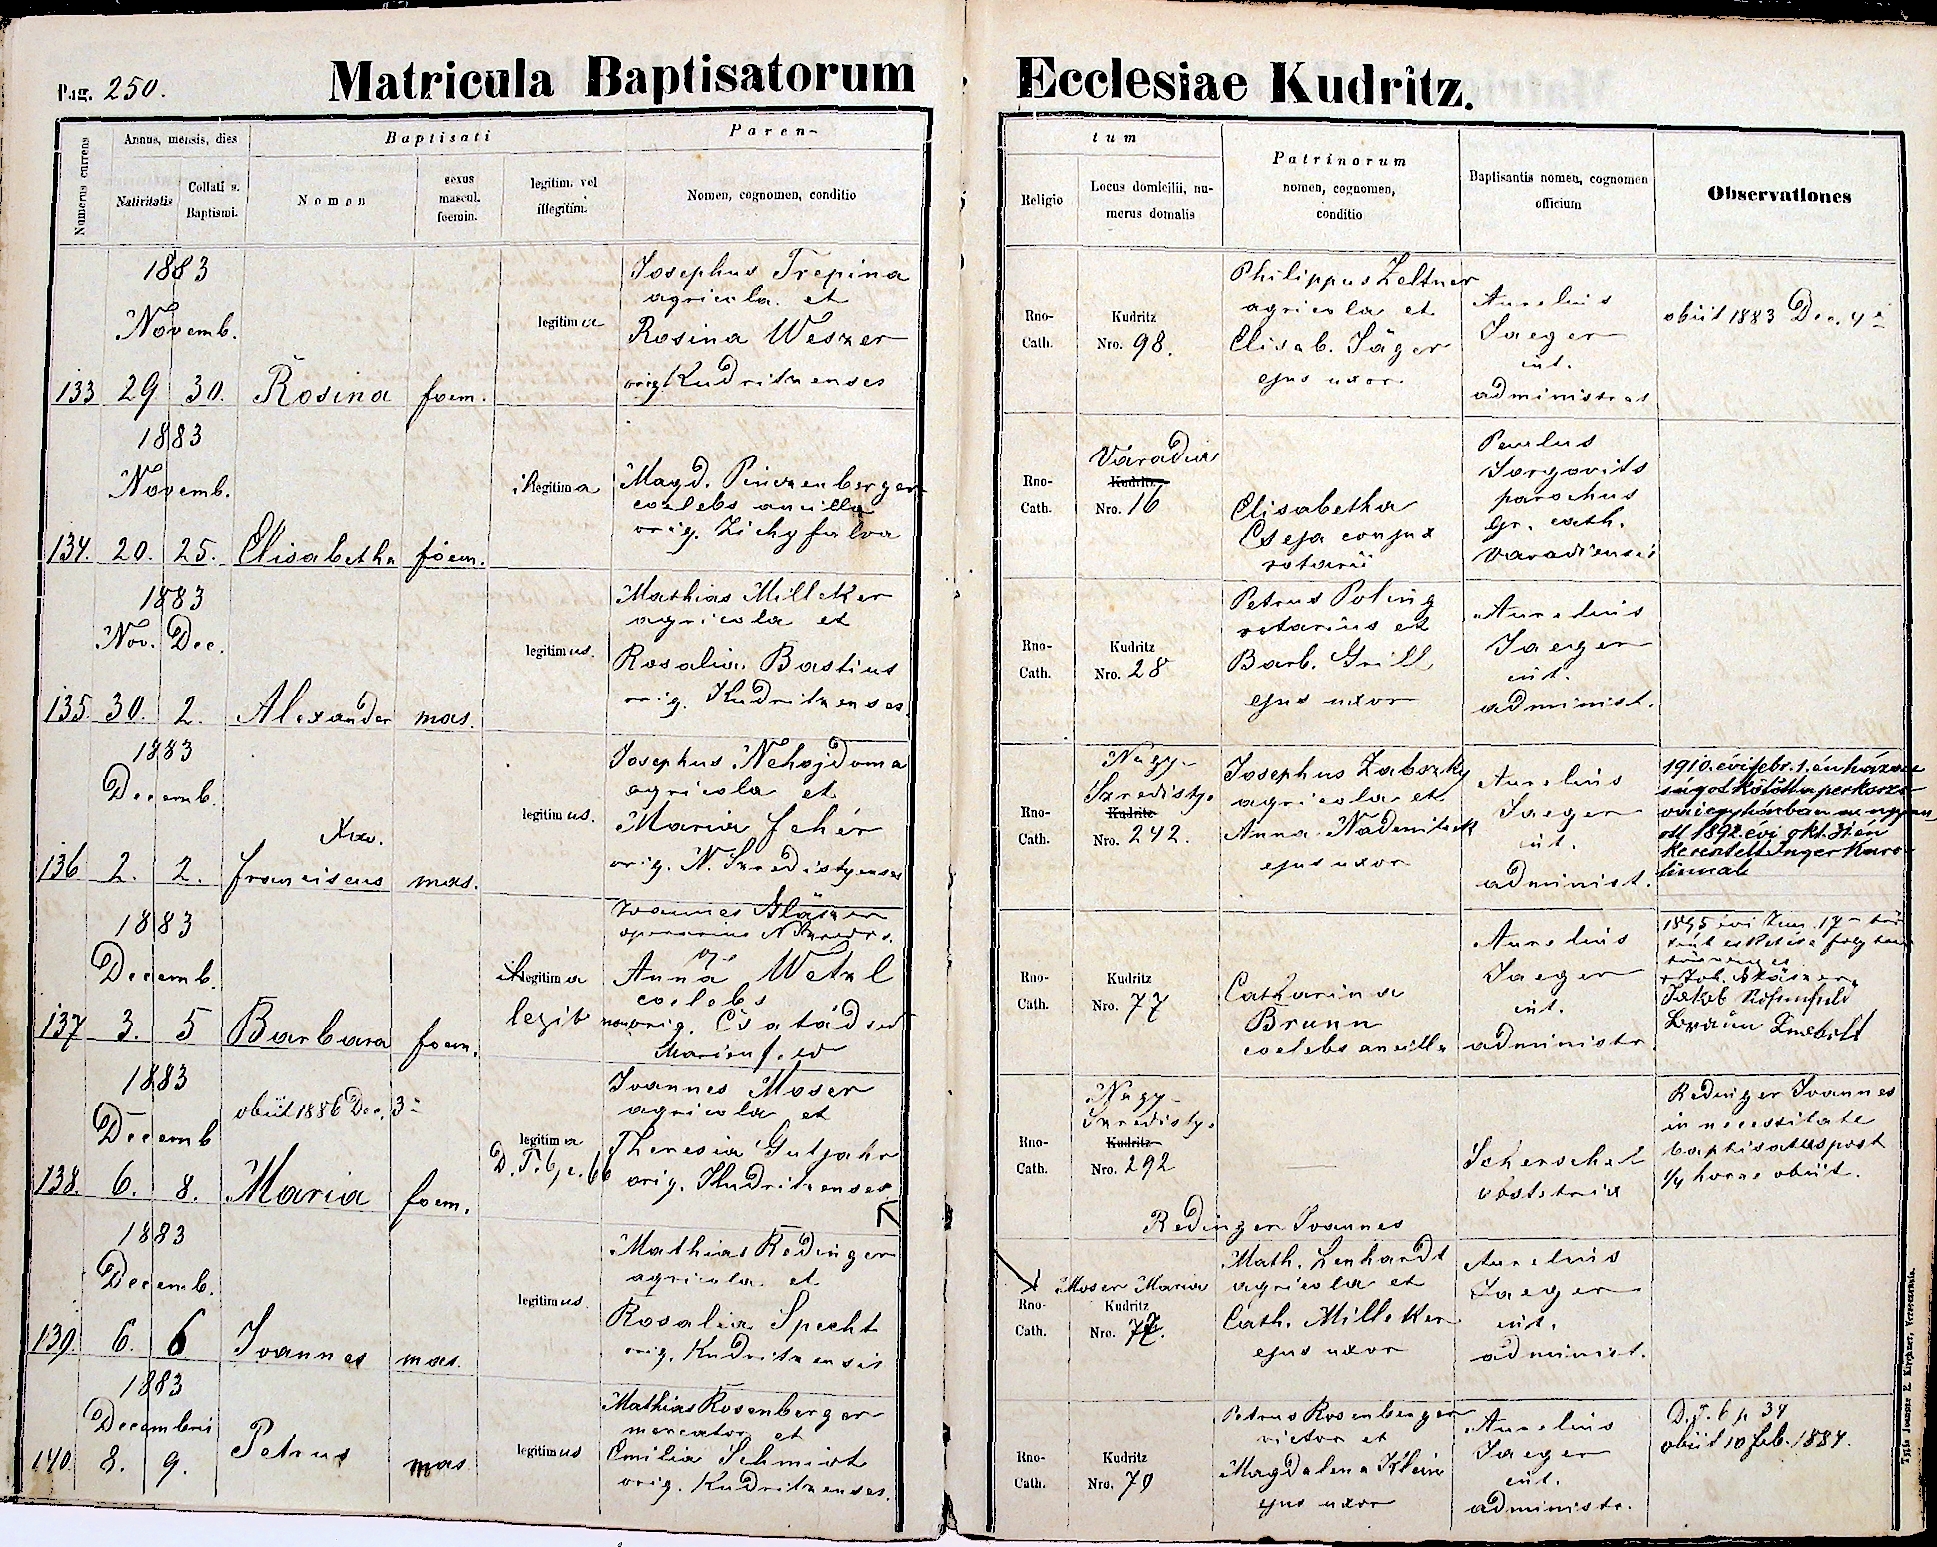 images/church_records/BIRTHS/1880-1883B/1883/250